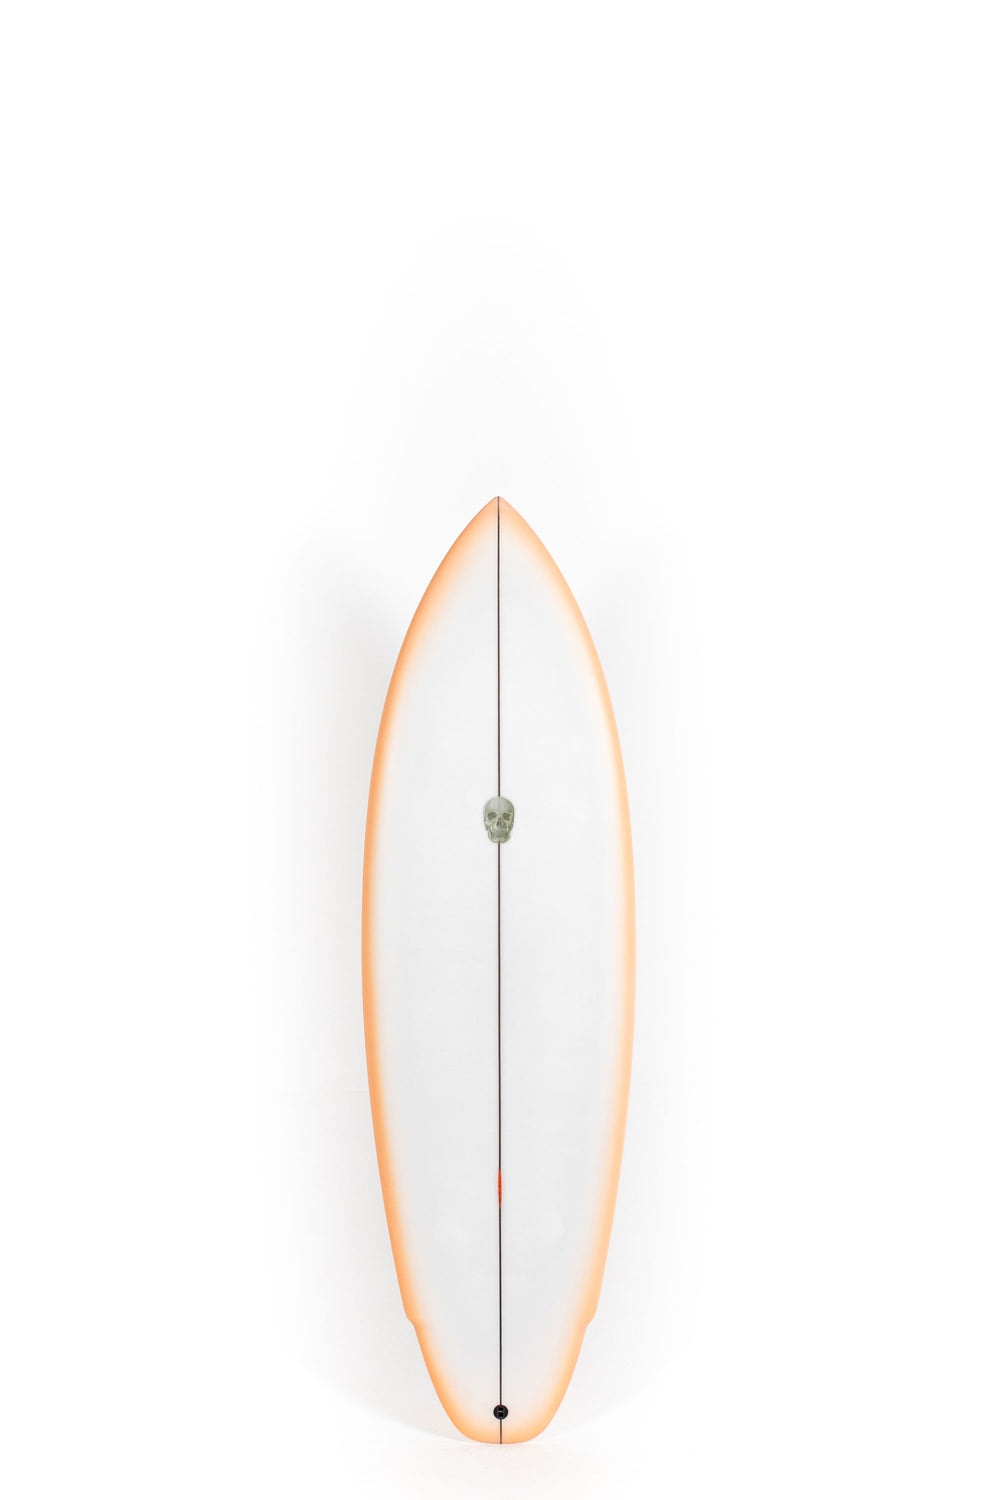 Pukas Surf Shop - Christenson Surfboards - LANE SPLITTER - 5'8